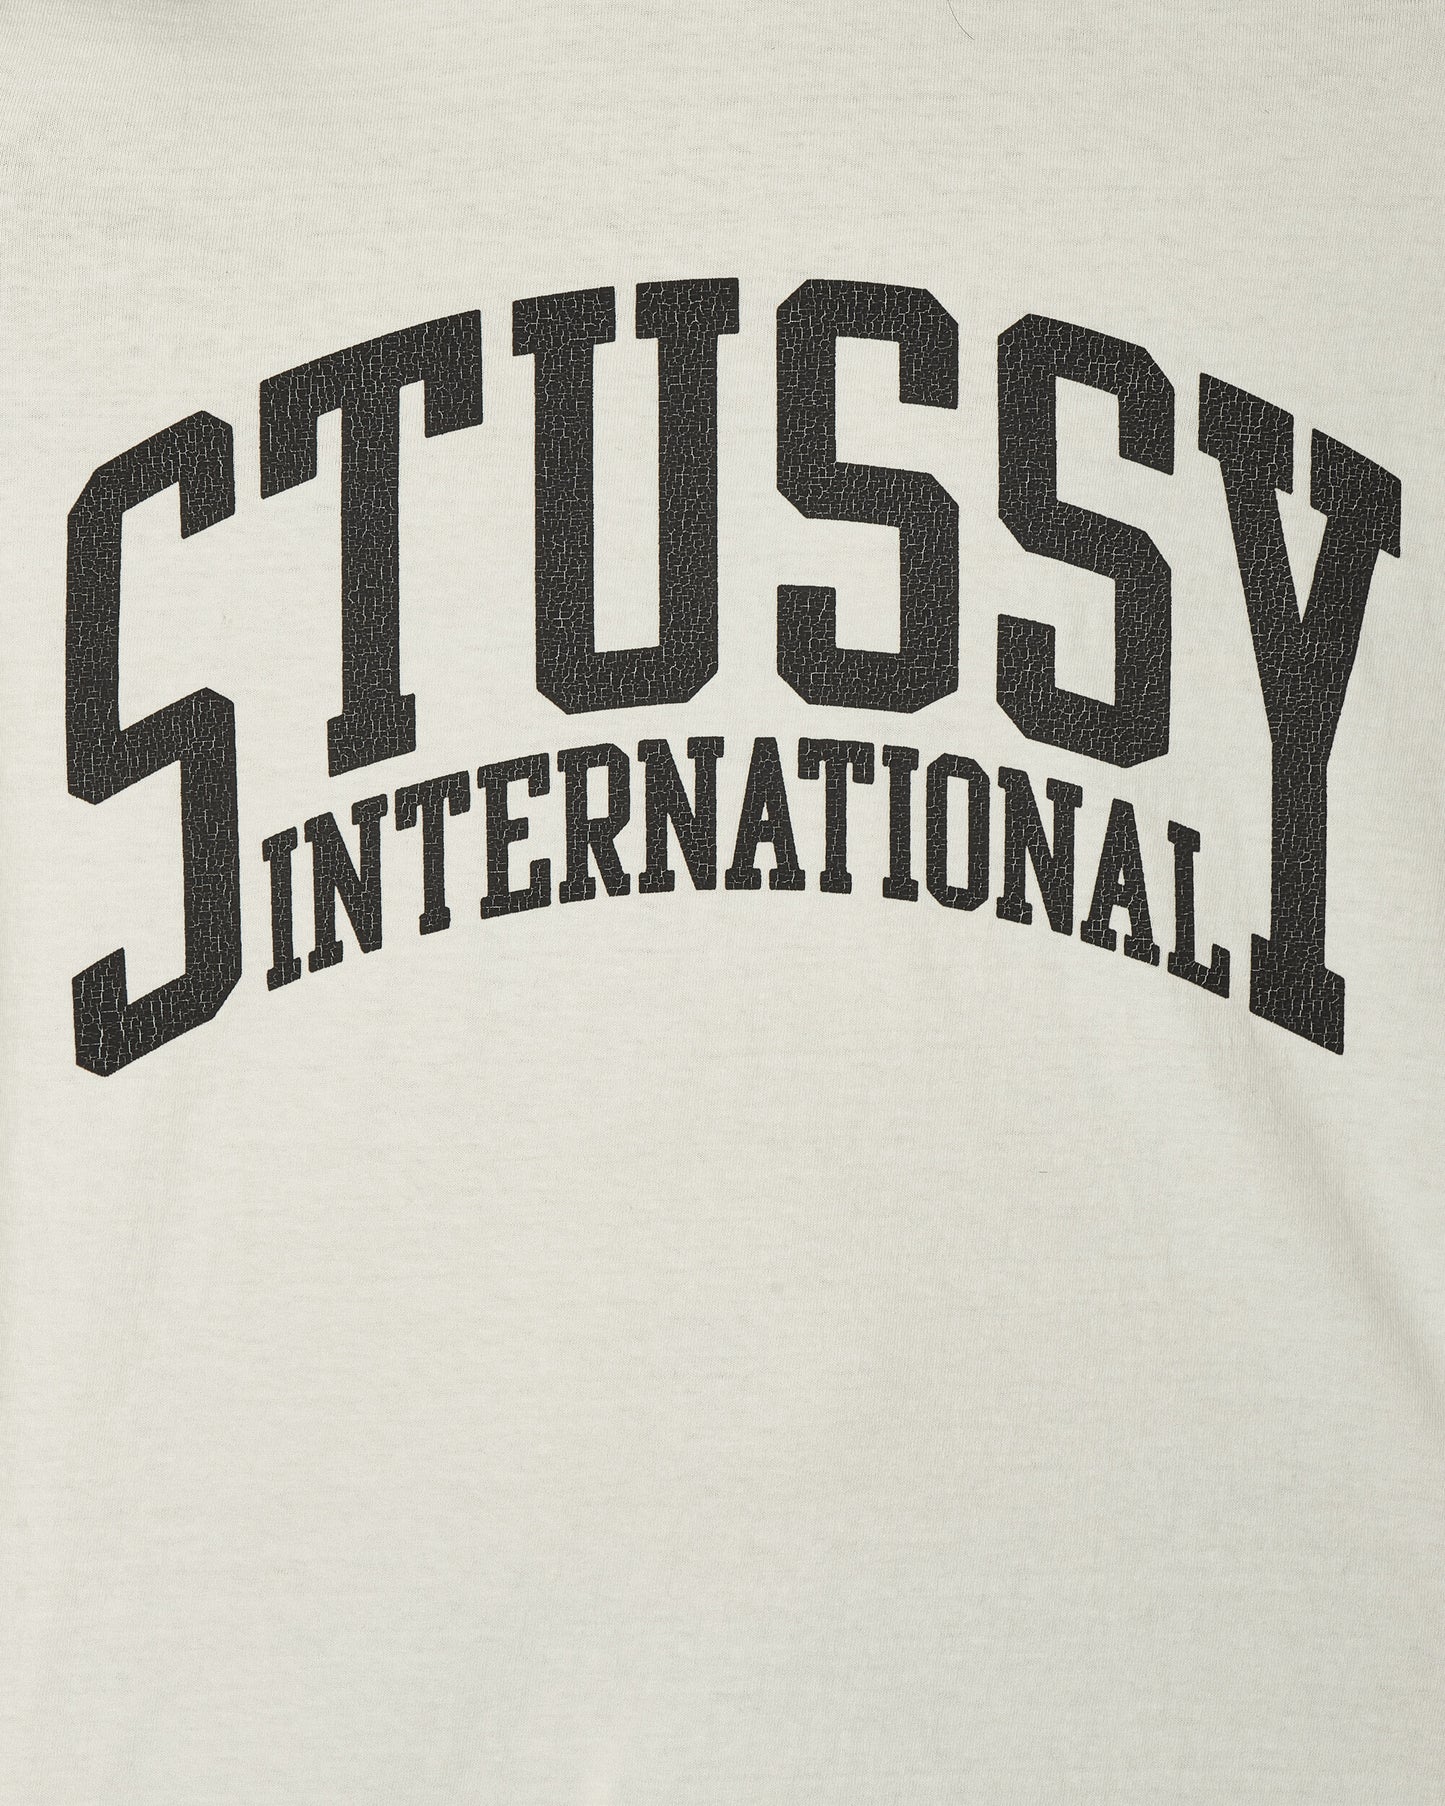 Stüssy Stussy International Pig Dyed Natural T-Shirts Shortsleeve 1905003G 1002